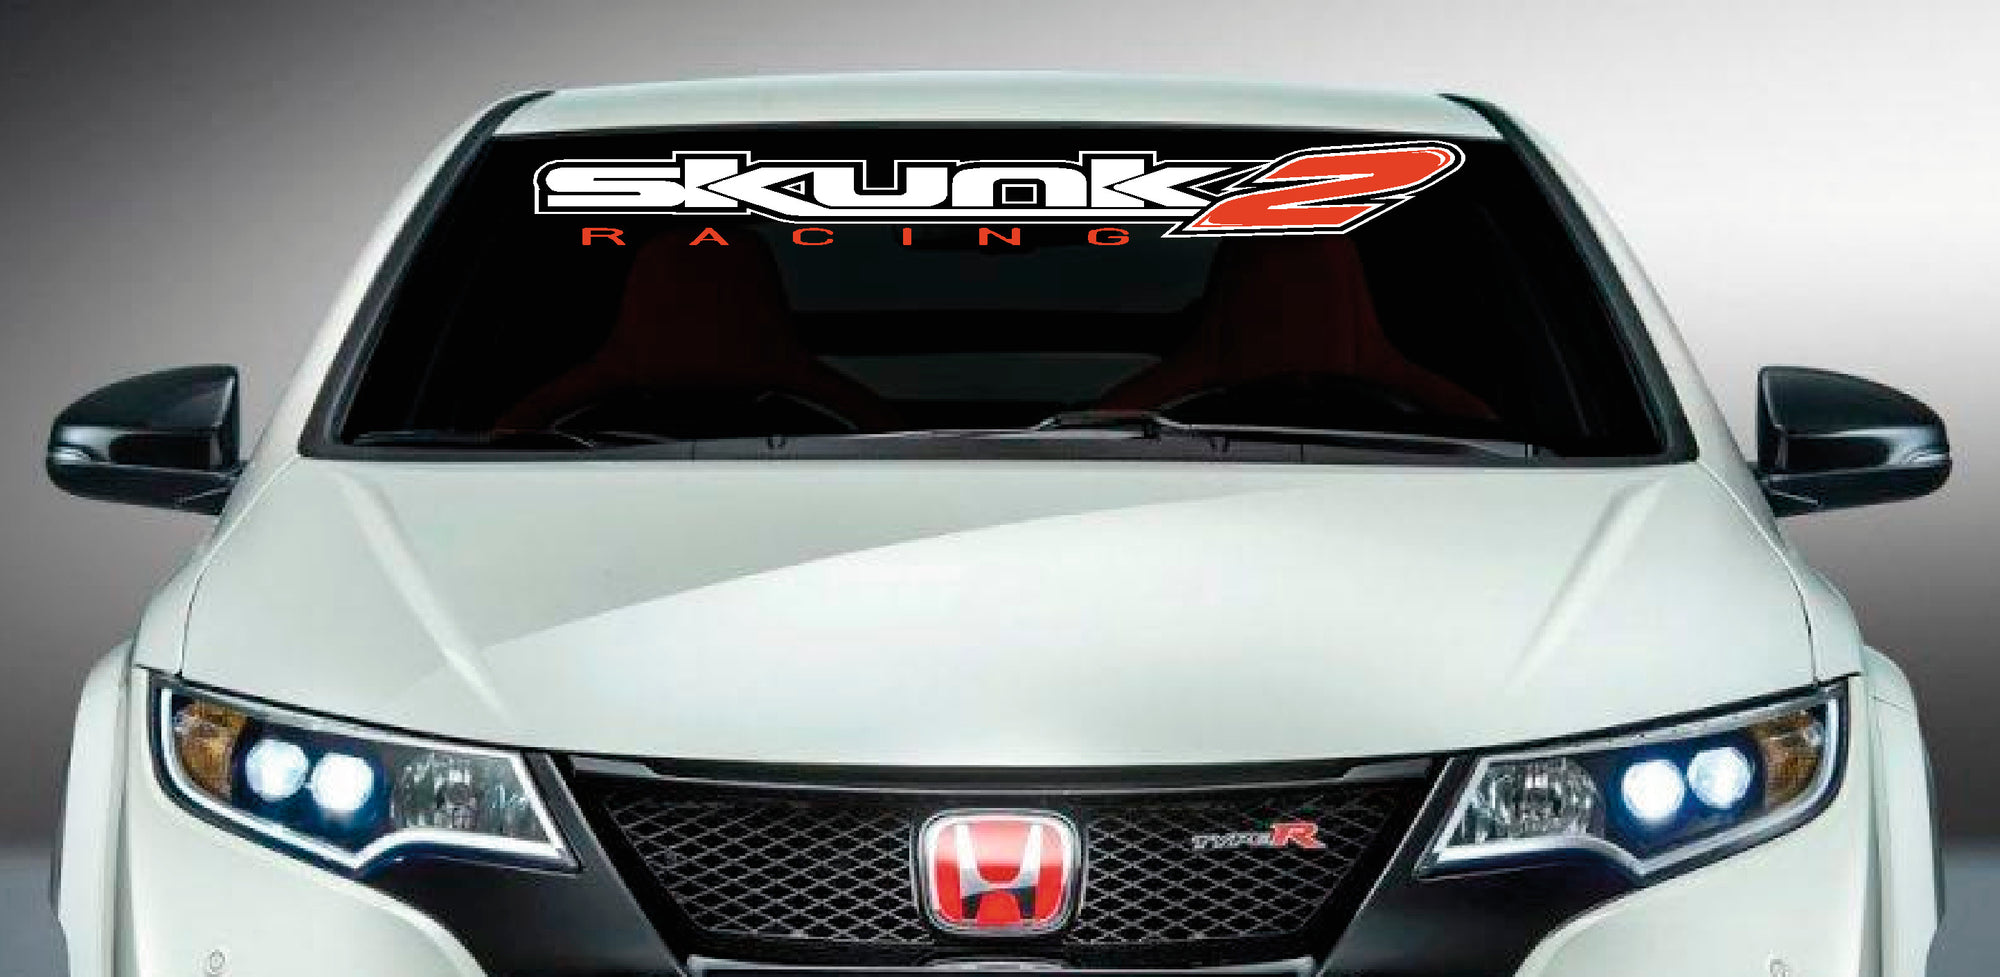 Skunk2 Racing windshield sticker